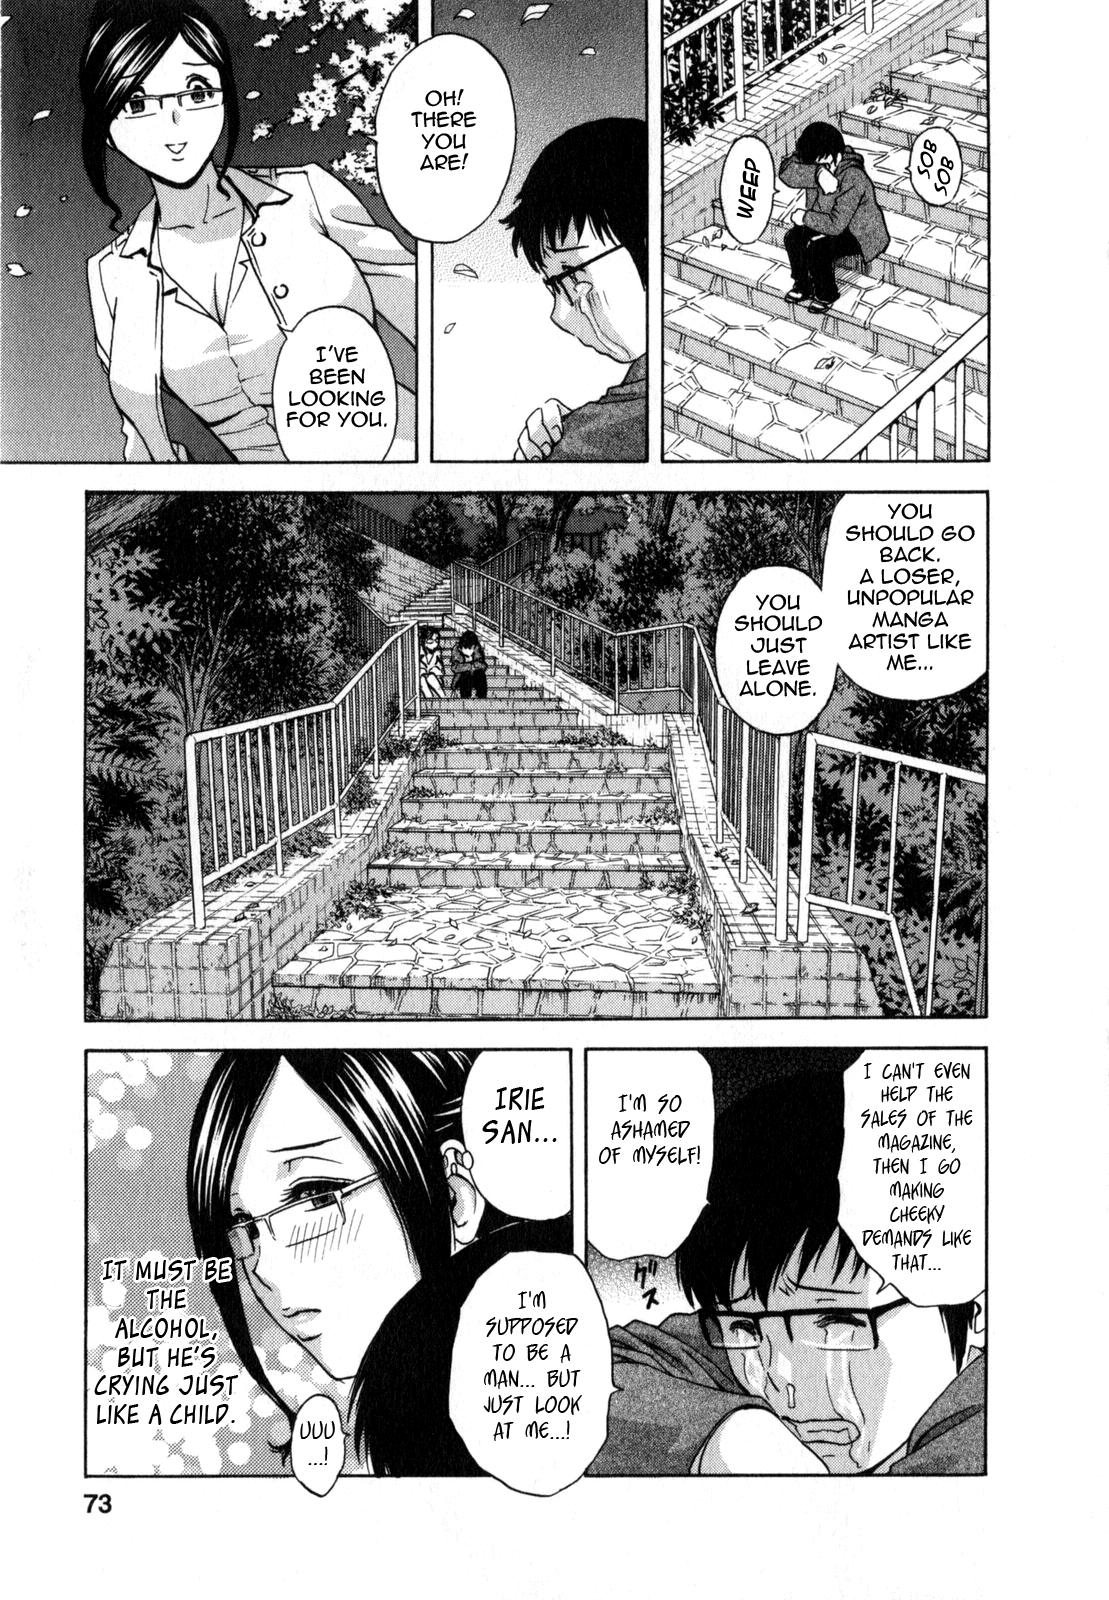 [Hidemaru] Life with Married Women Just Like a Manga 2 - Ch. 1-4 [English] {Tadanohito} 75